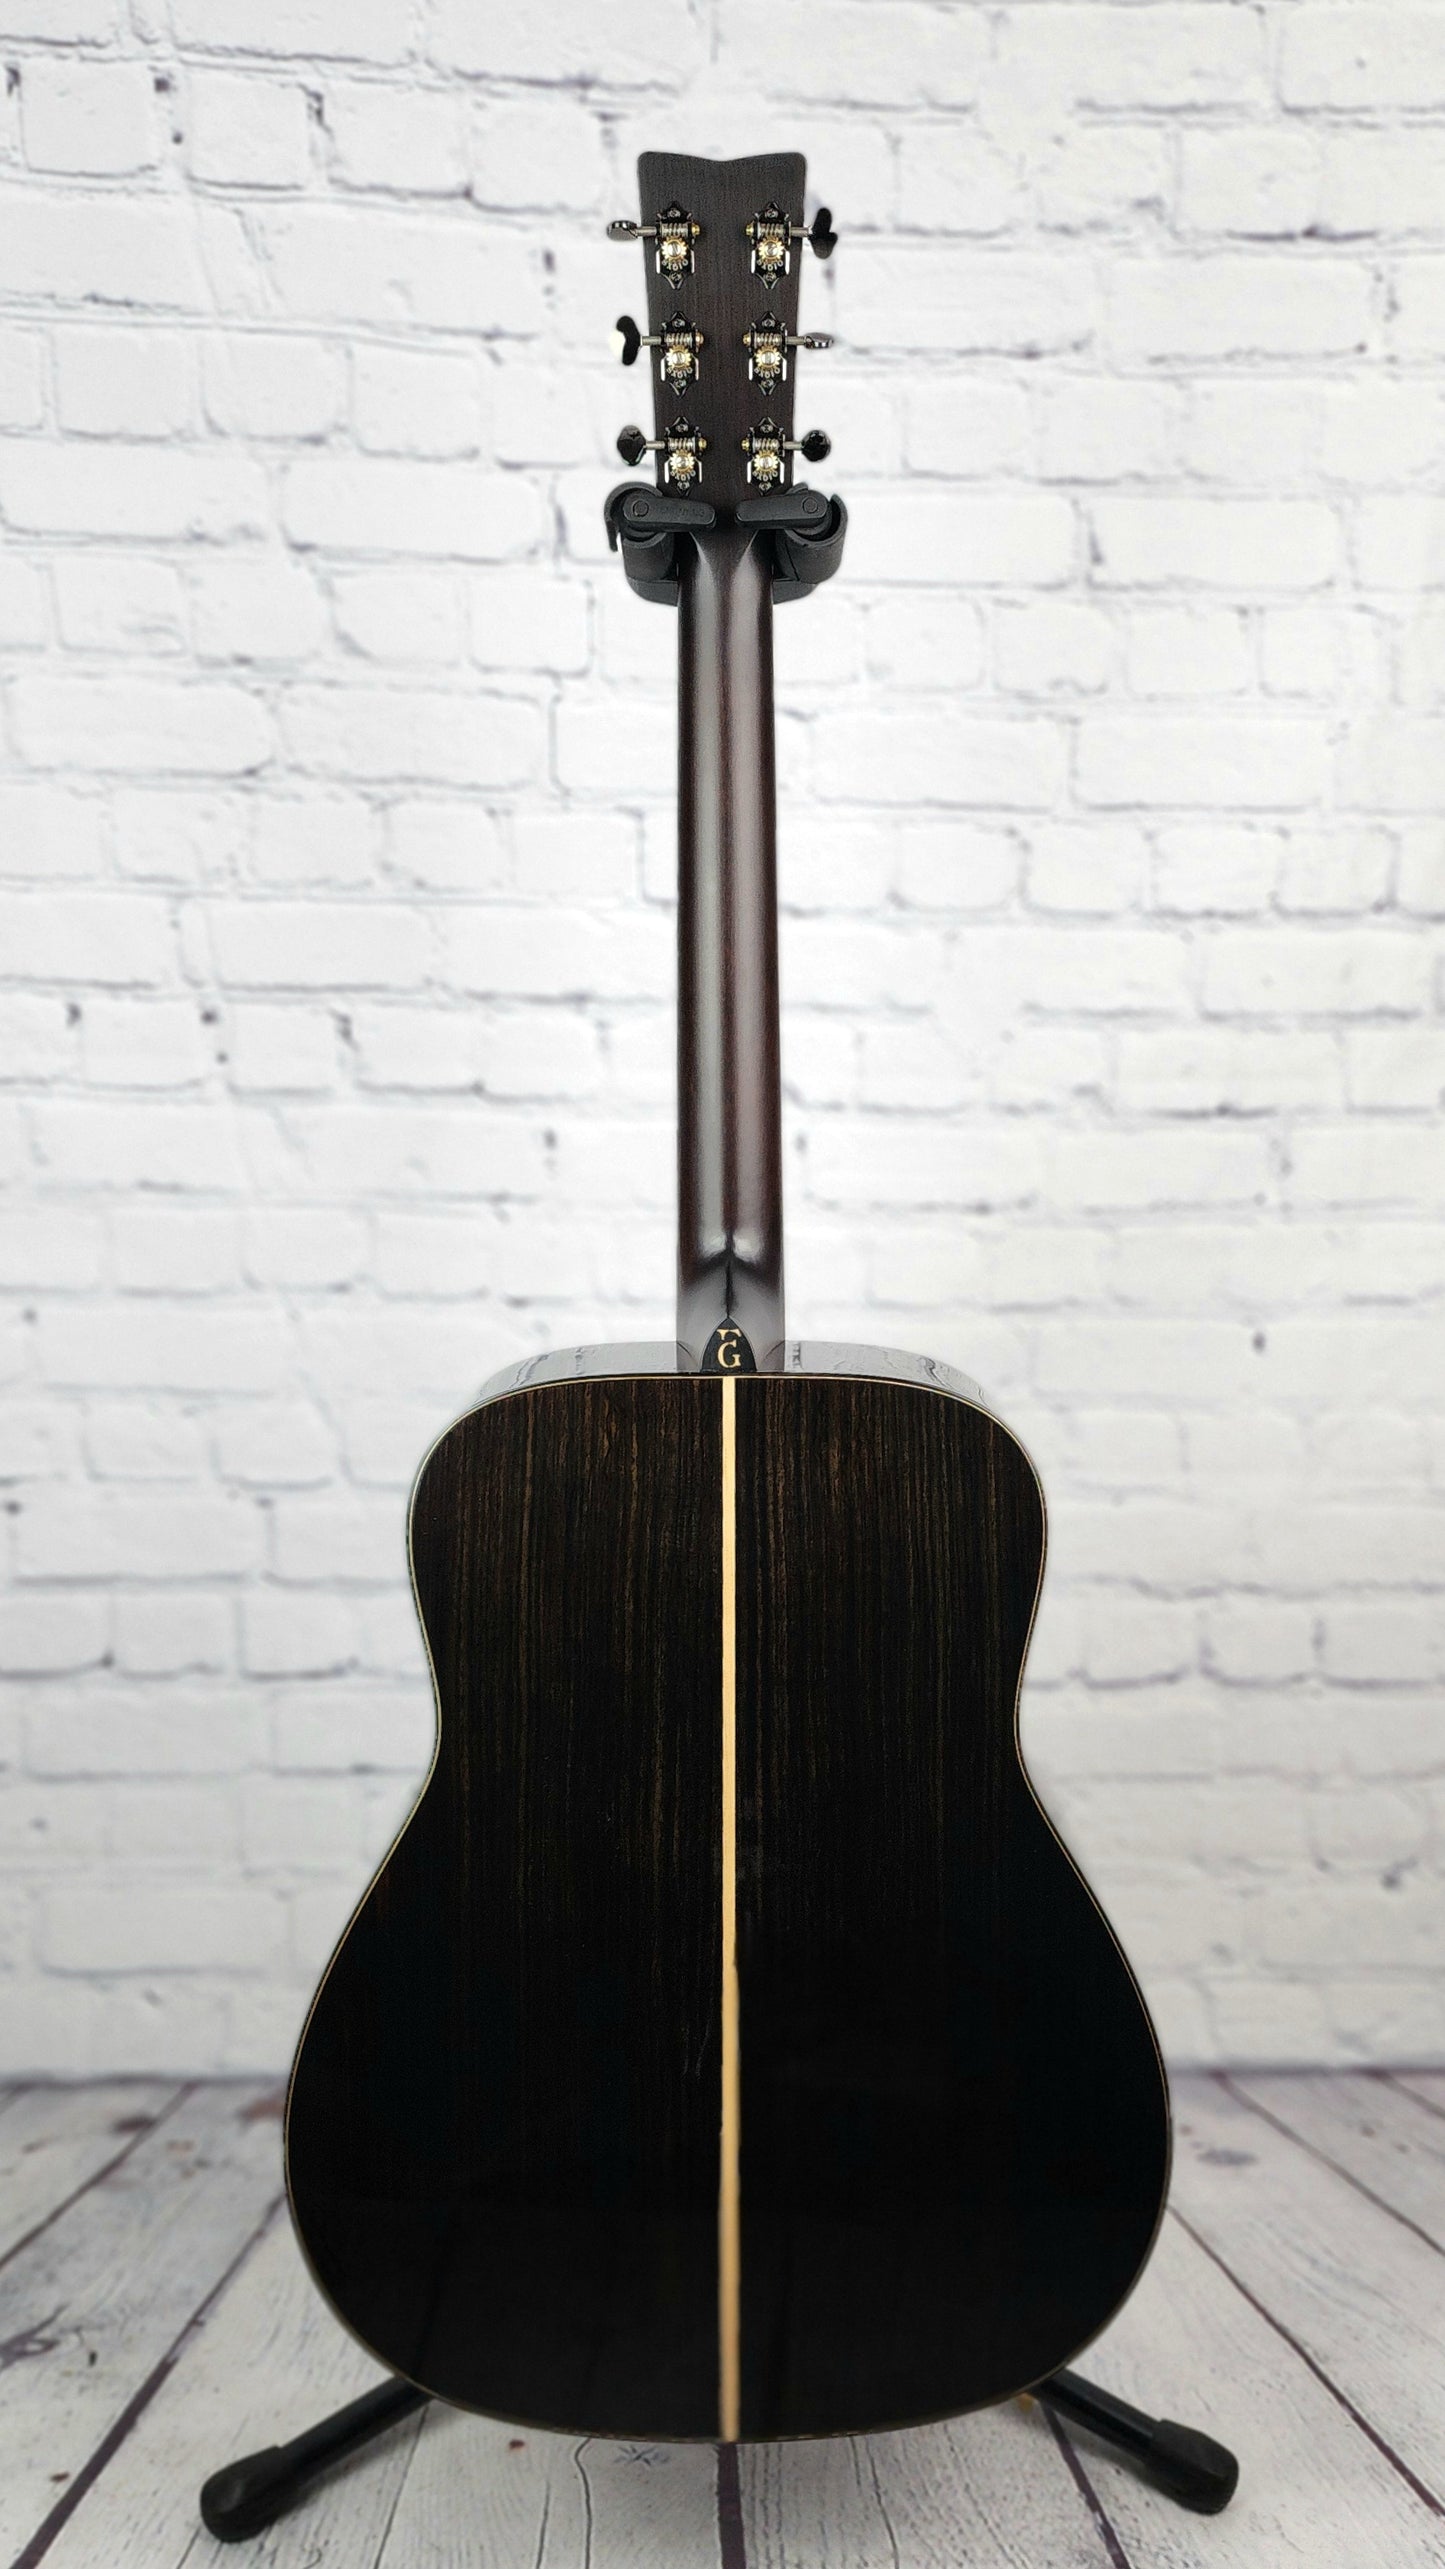 Yamaha Guitars FG9 Rosewood Dreadnaught Acoustic Guitar Natural Adirondack Spruce